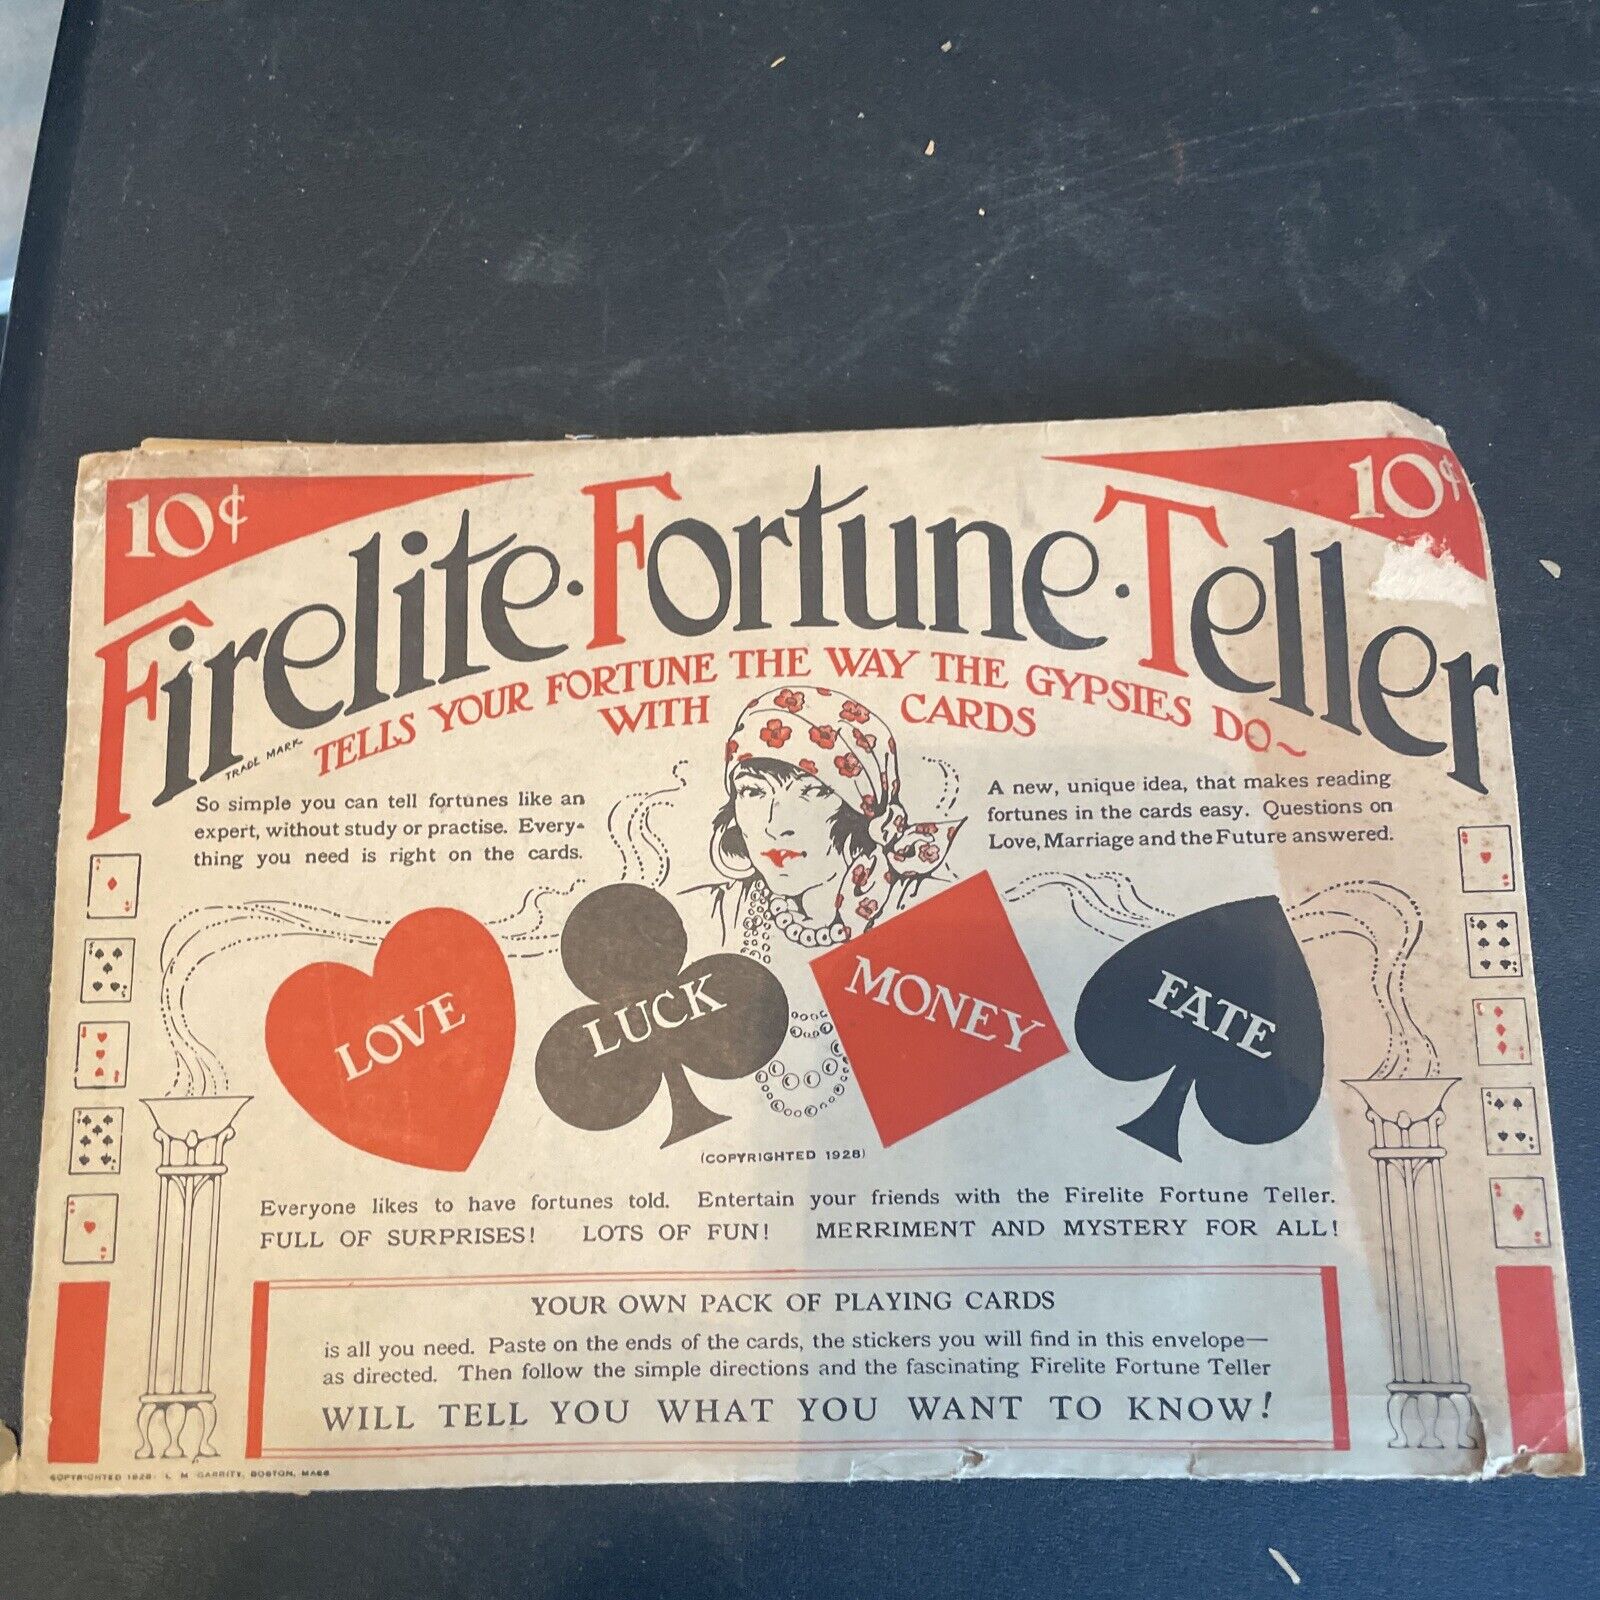 Firelite Fortune Teller Vintage Playing Card Game 1928 - Damaged